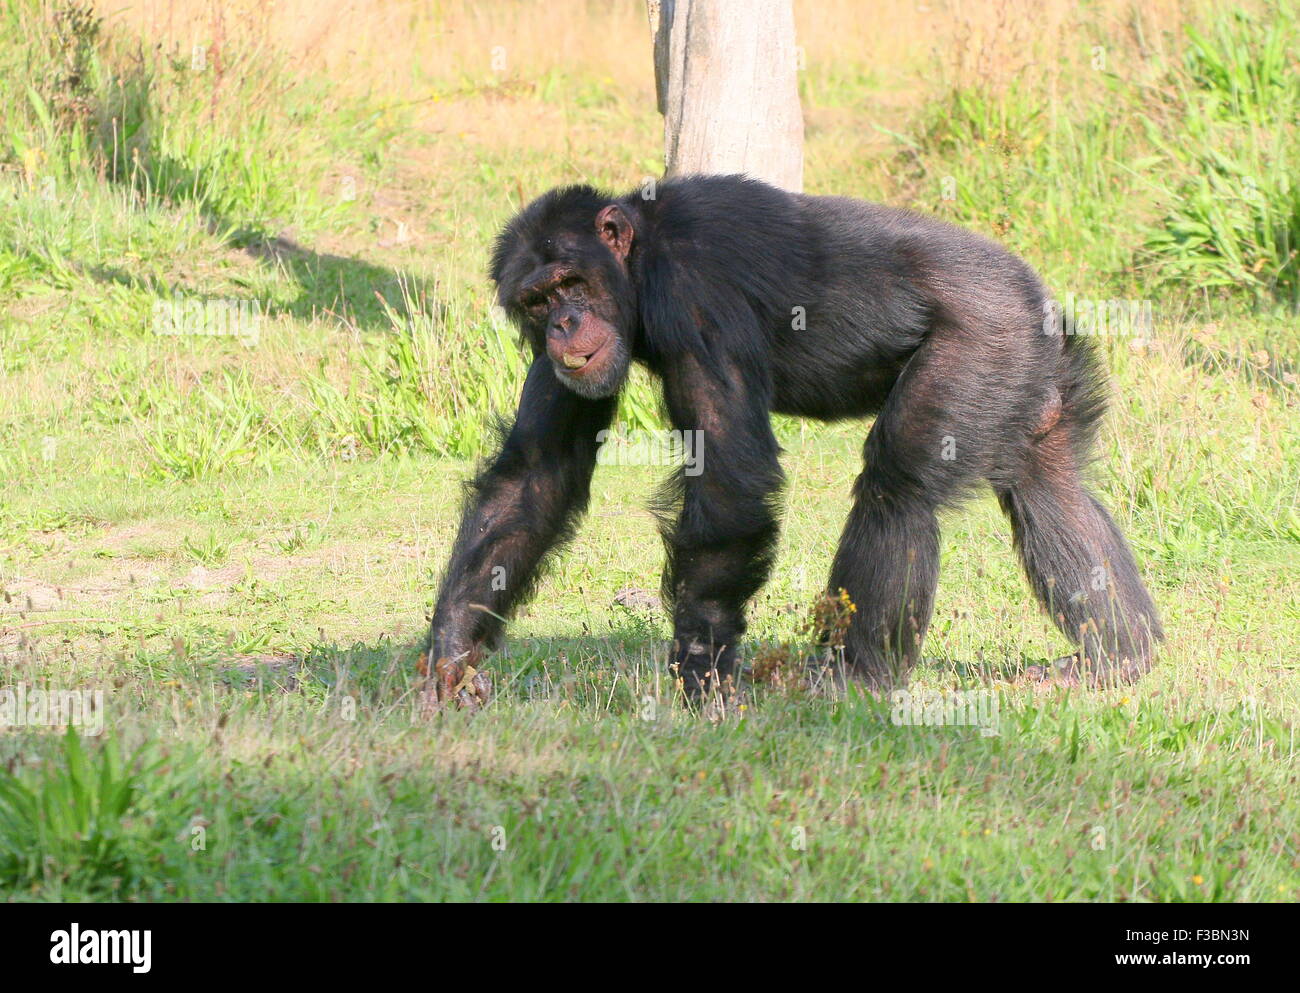 Mature Common chimpanzee (Pan troglodytes) walking in a natural setting Stock Photo